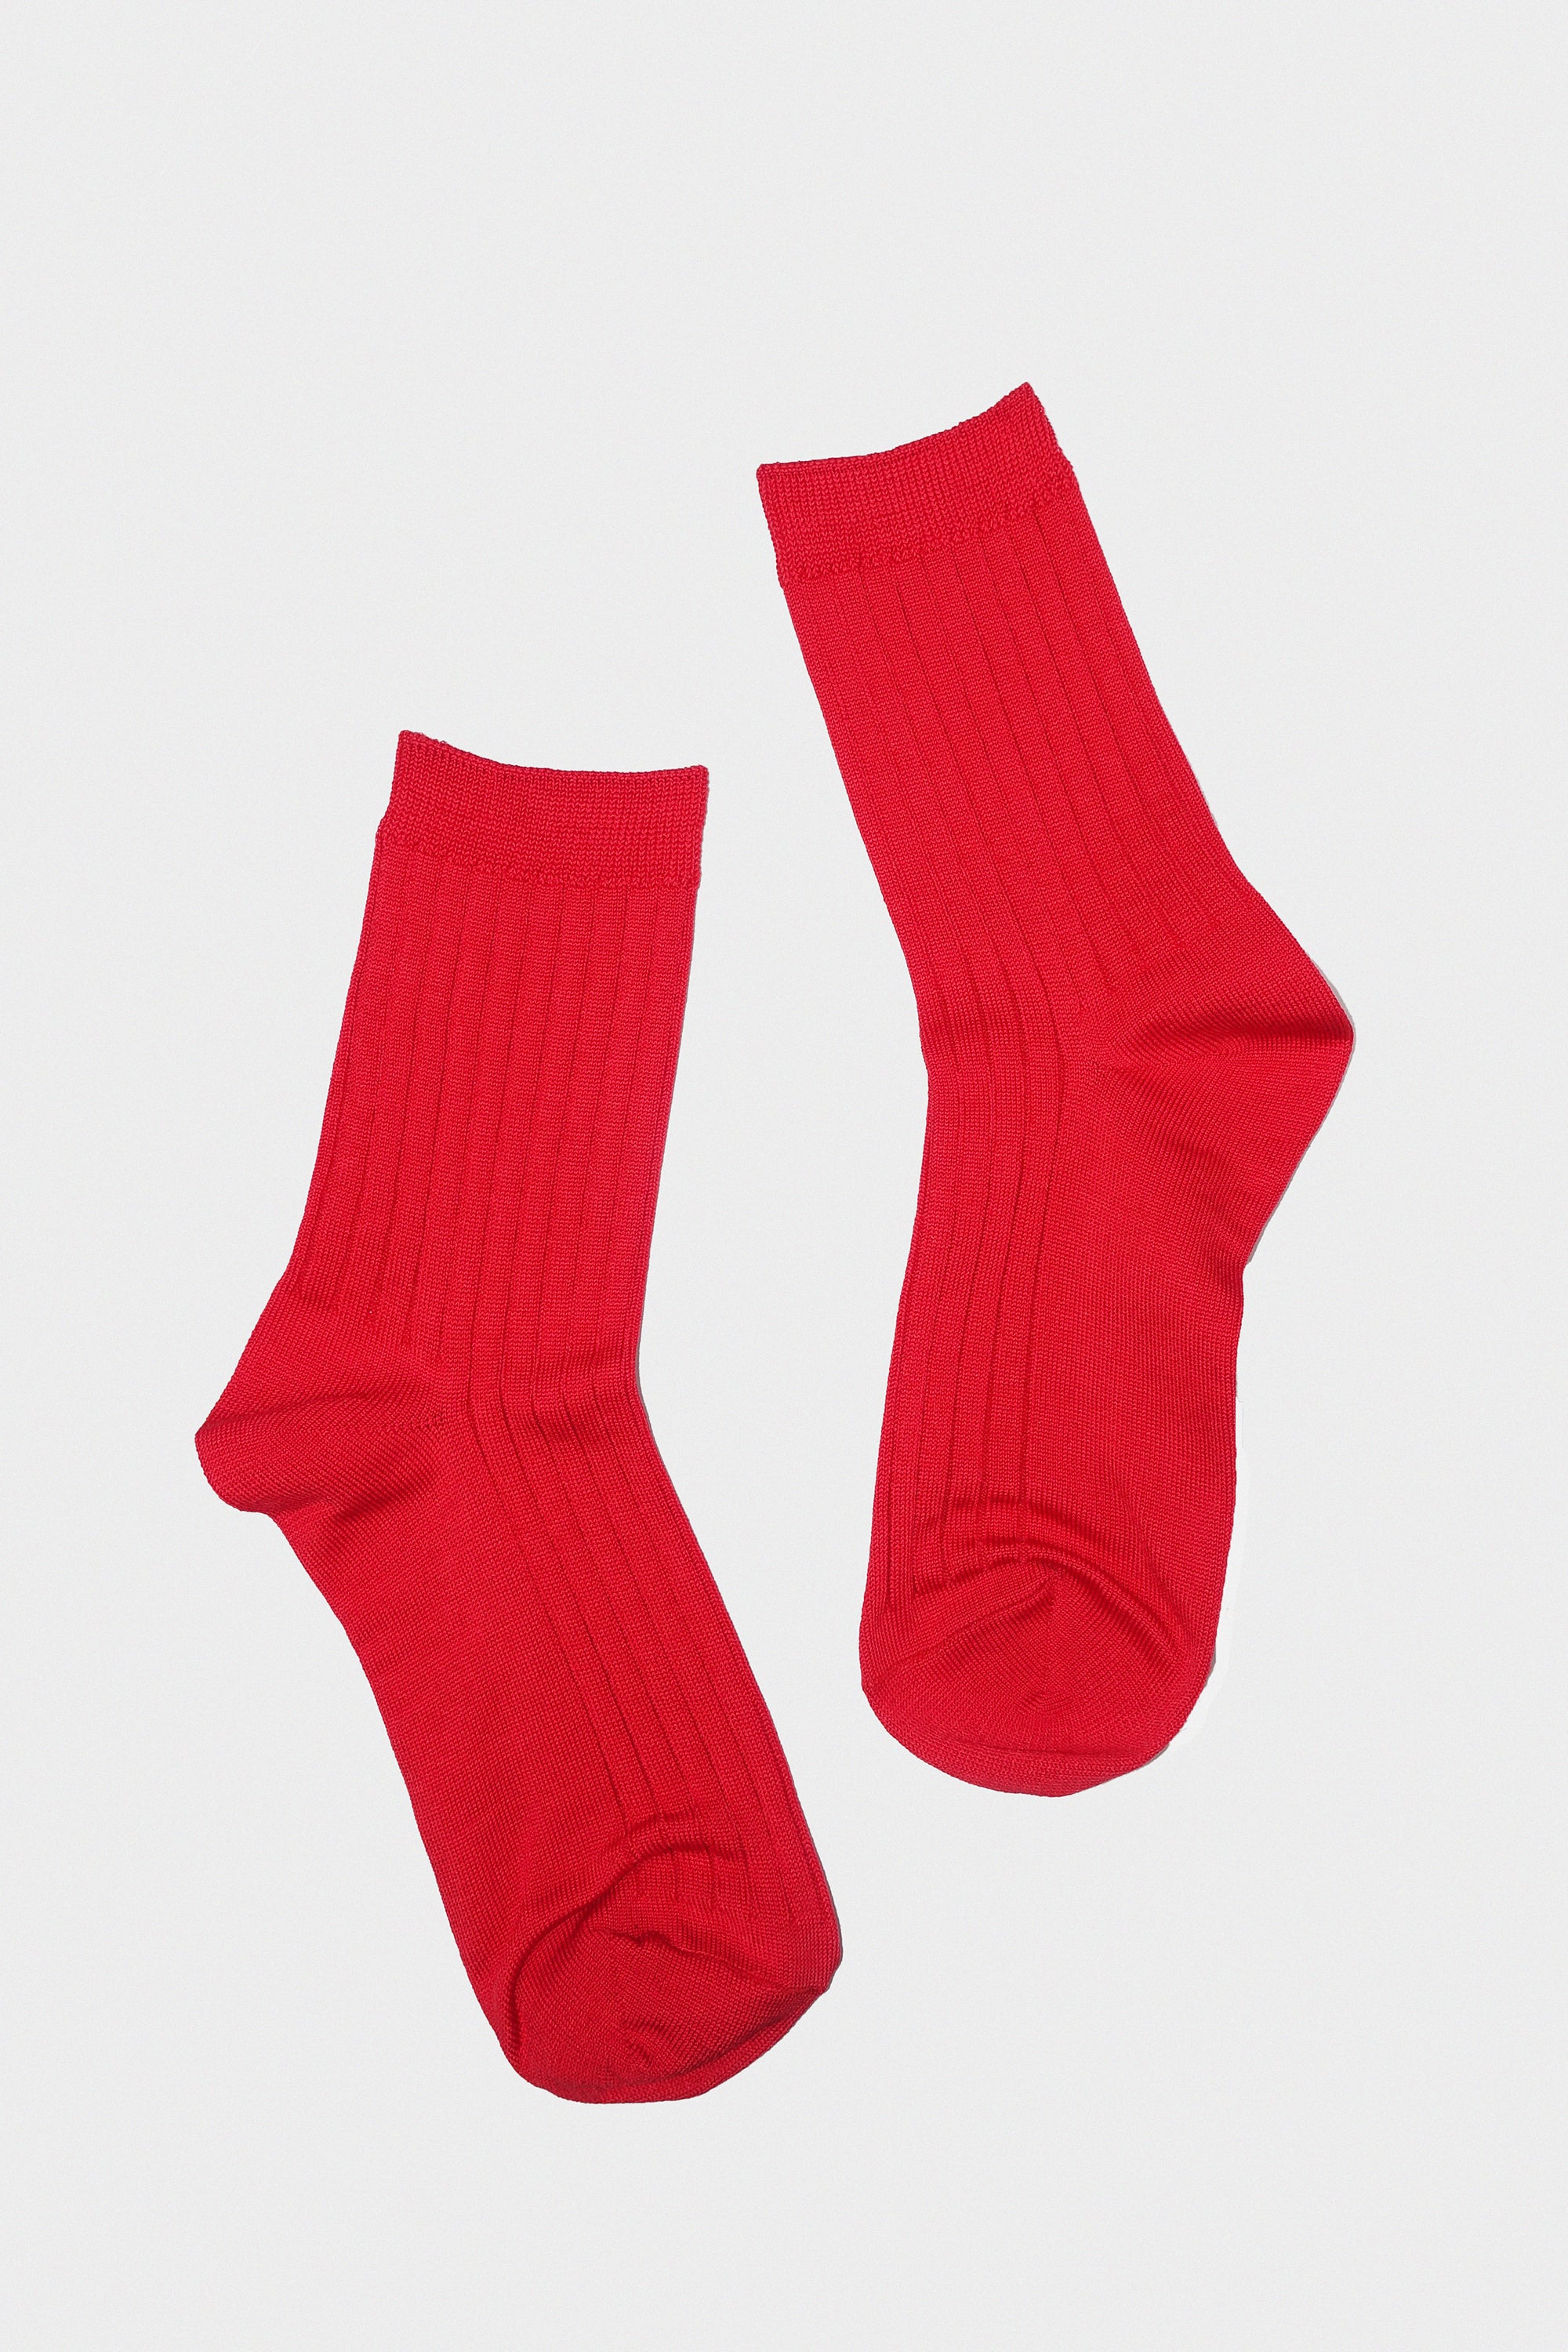 Her Socks in Classic Red